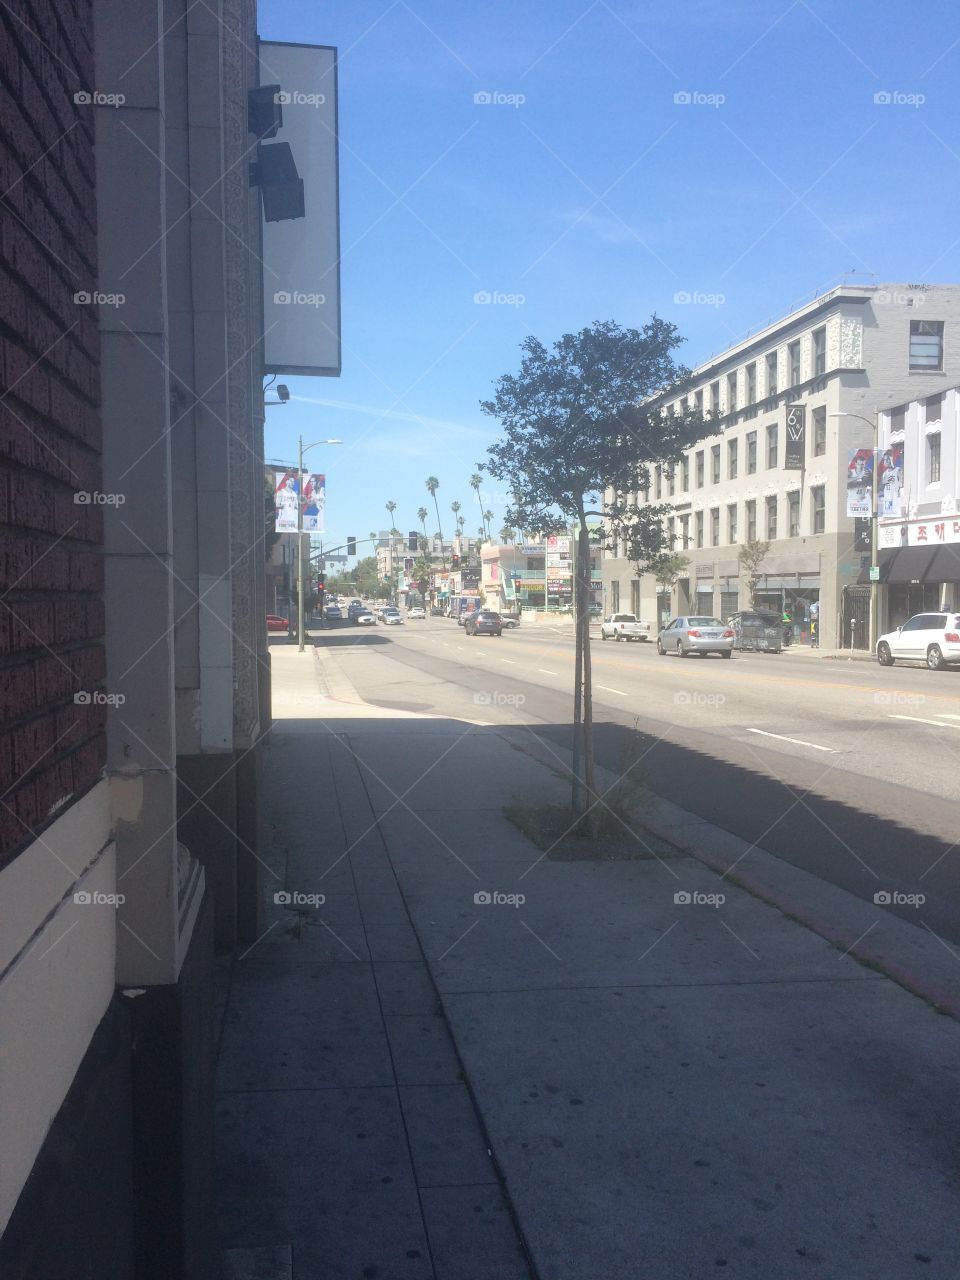 Los Angeles Street View
